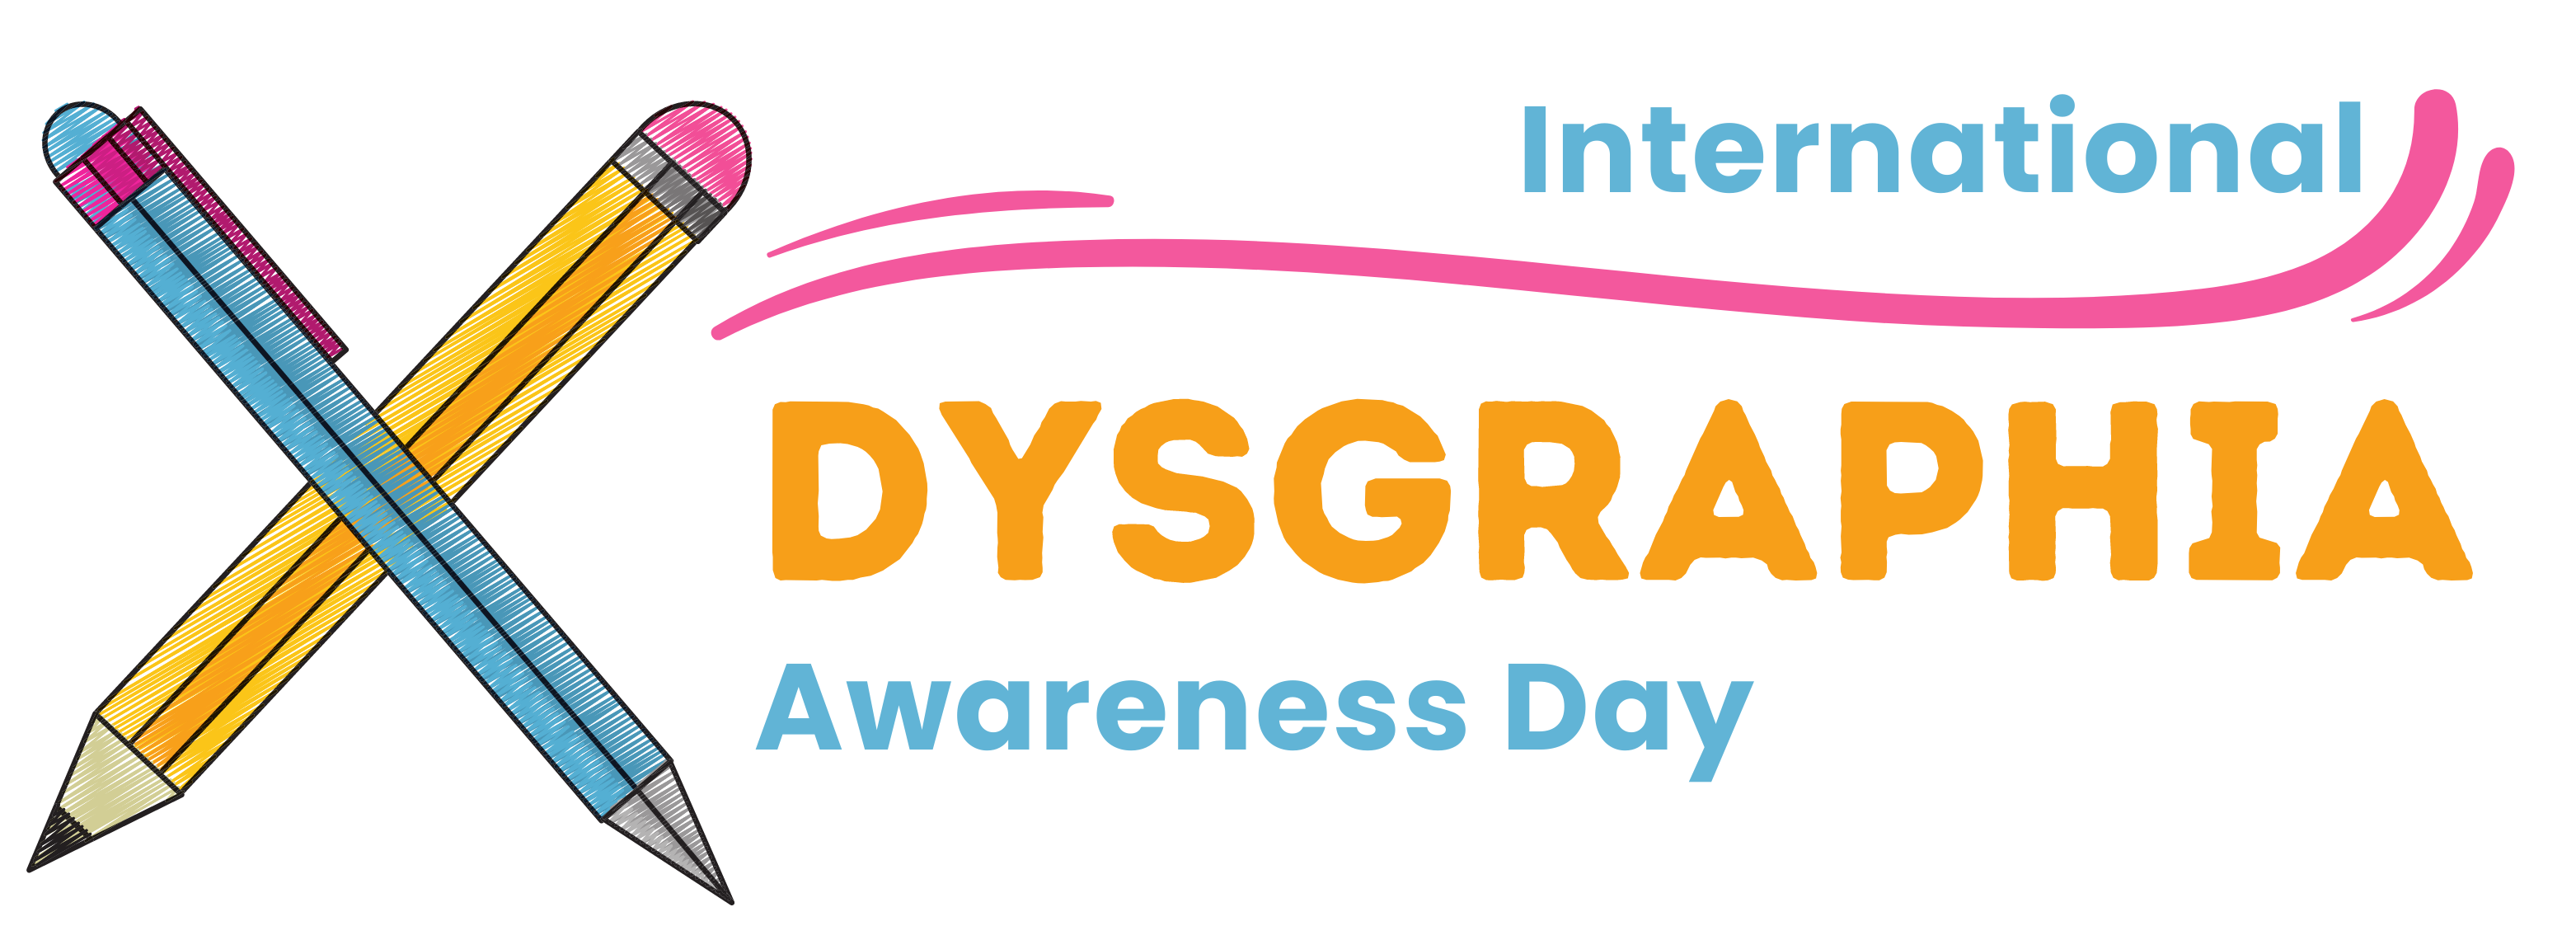 International dysgraphia awareness day